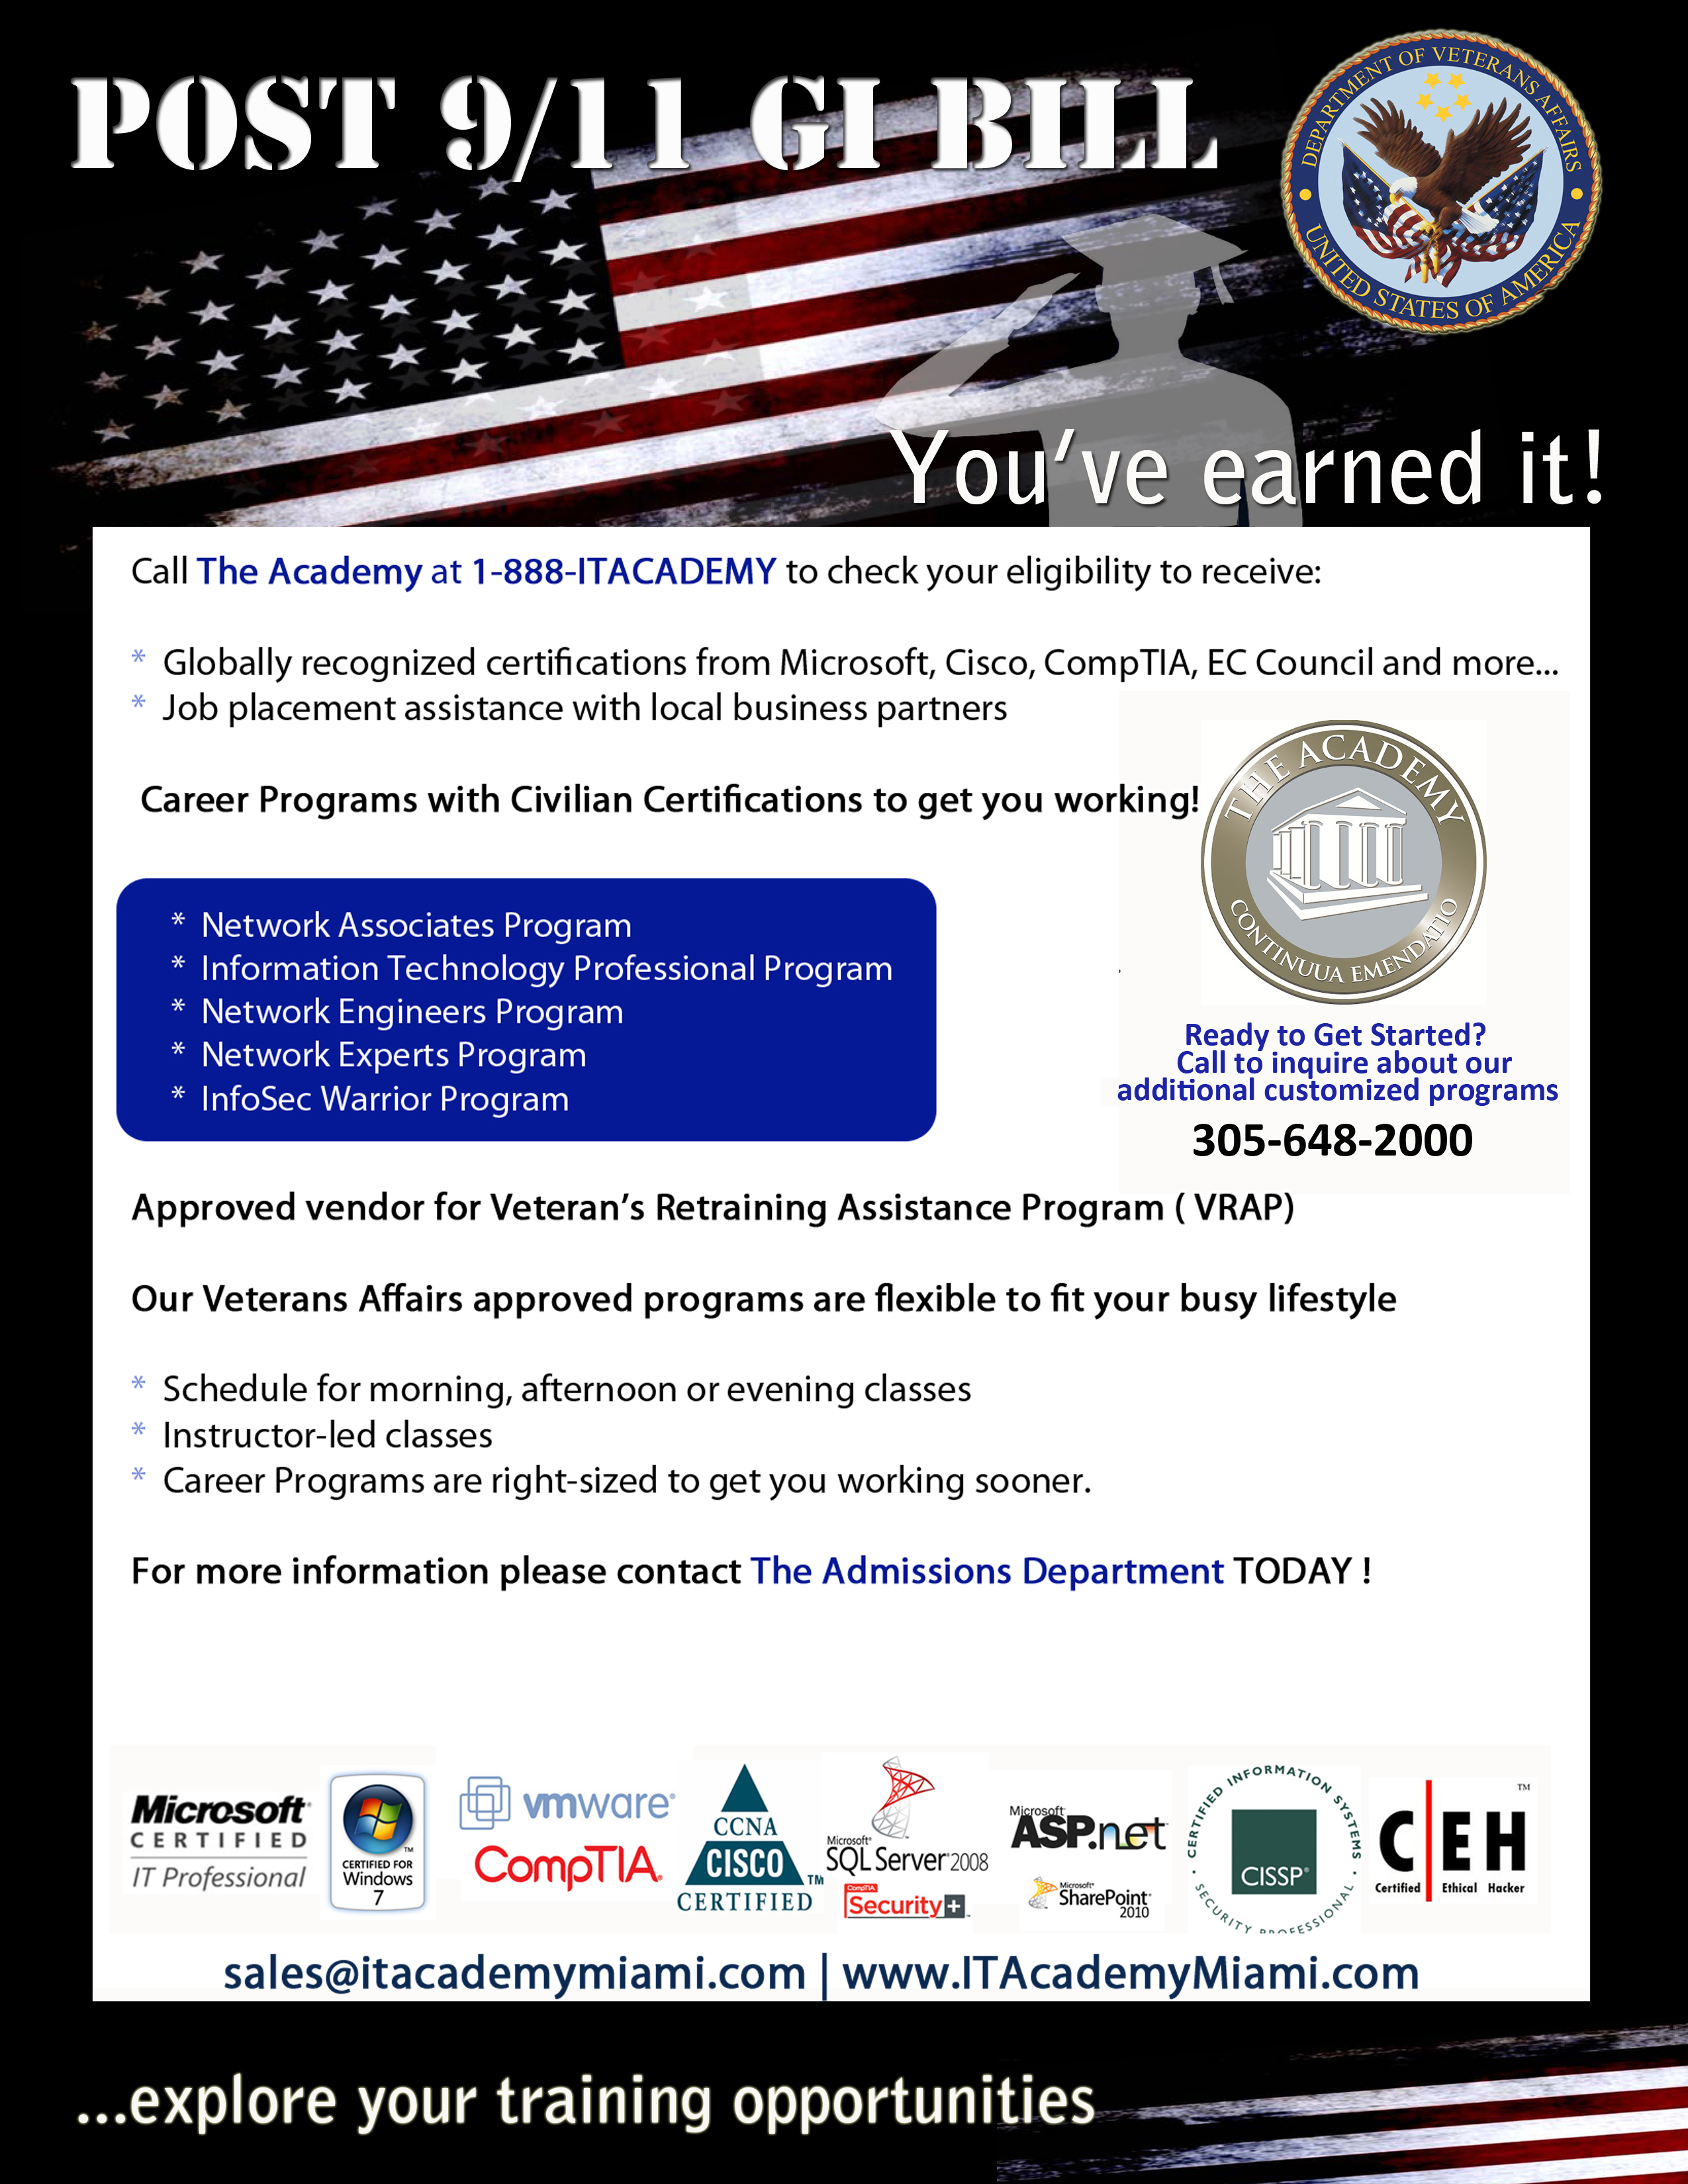 IT Civilian Certification programs for Veterans